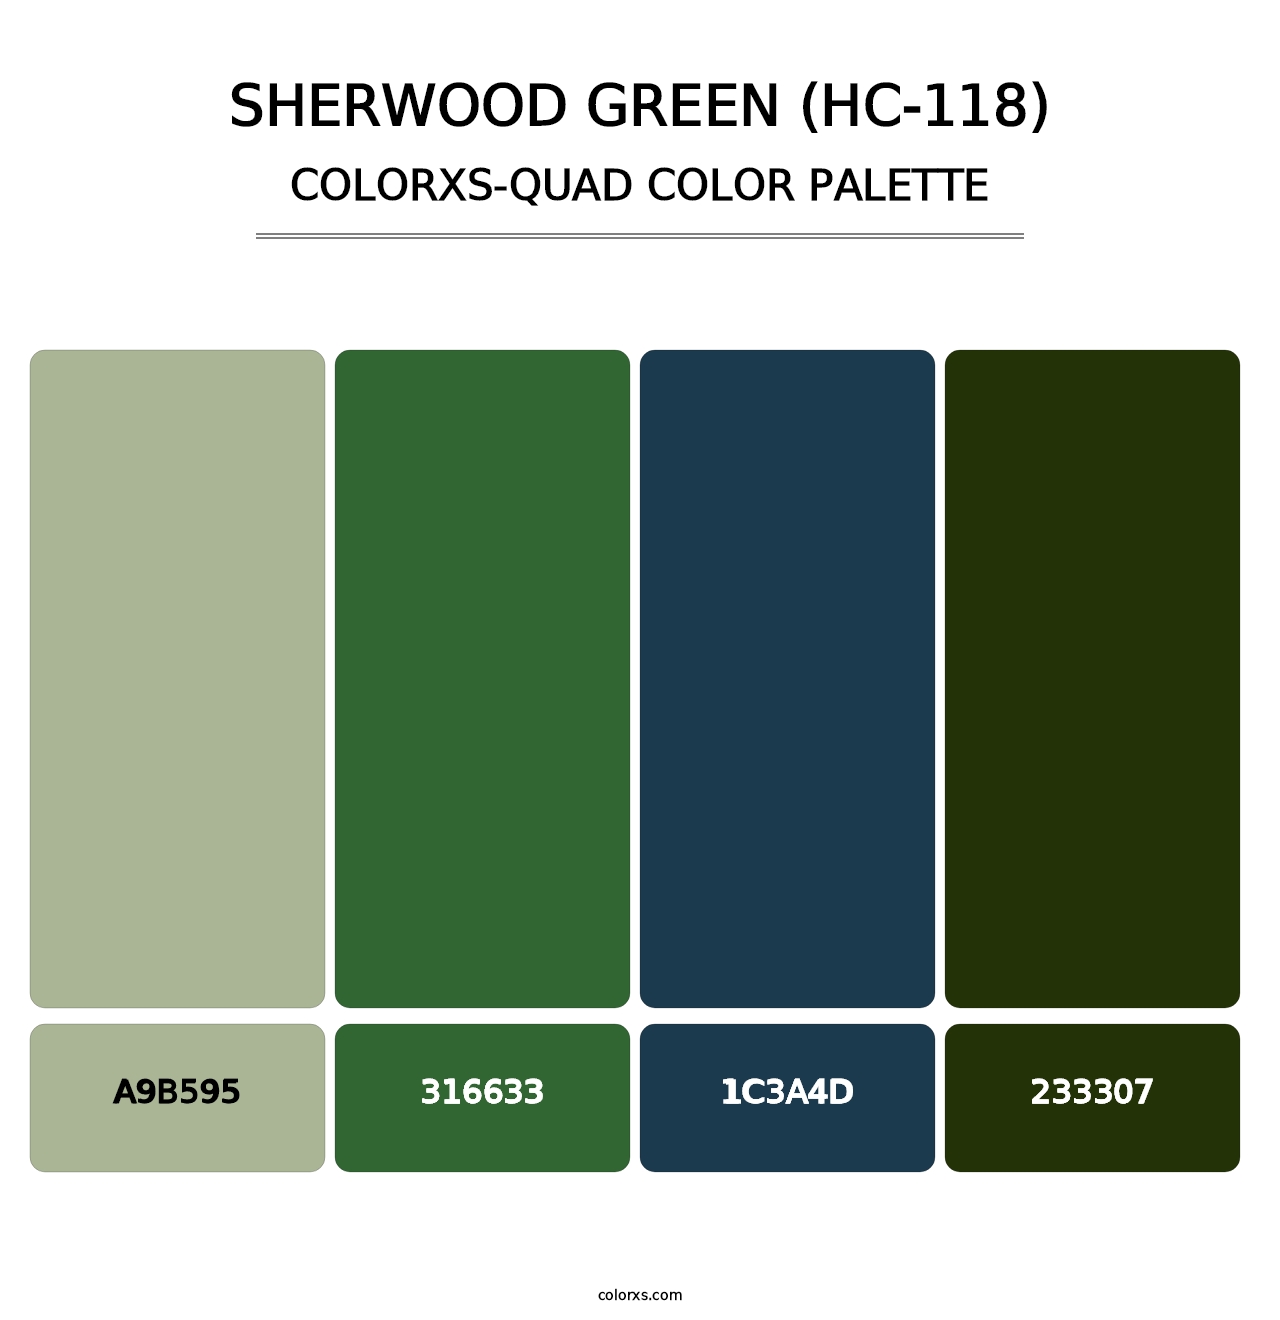 Sherwood Green (HC-118) - Colorxs Quad Palette